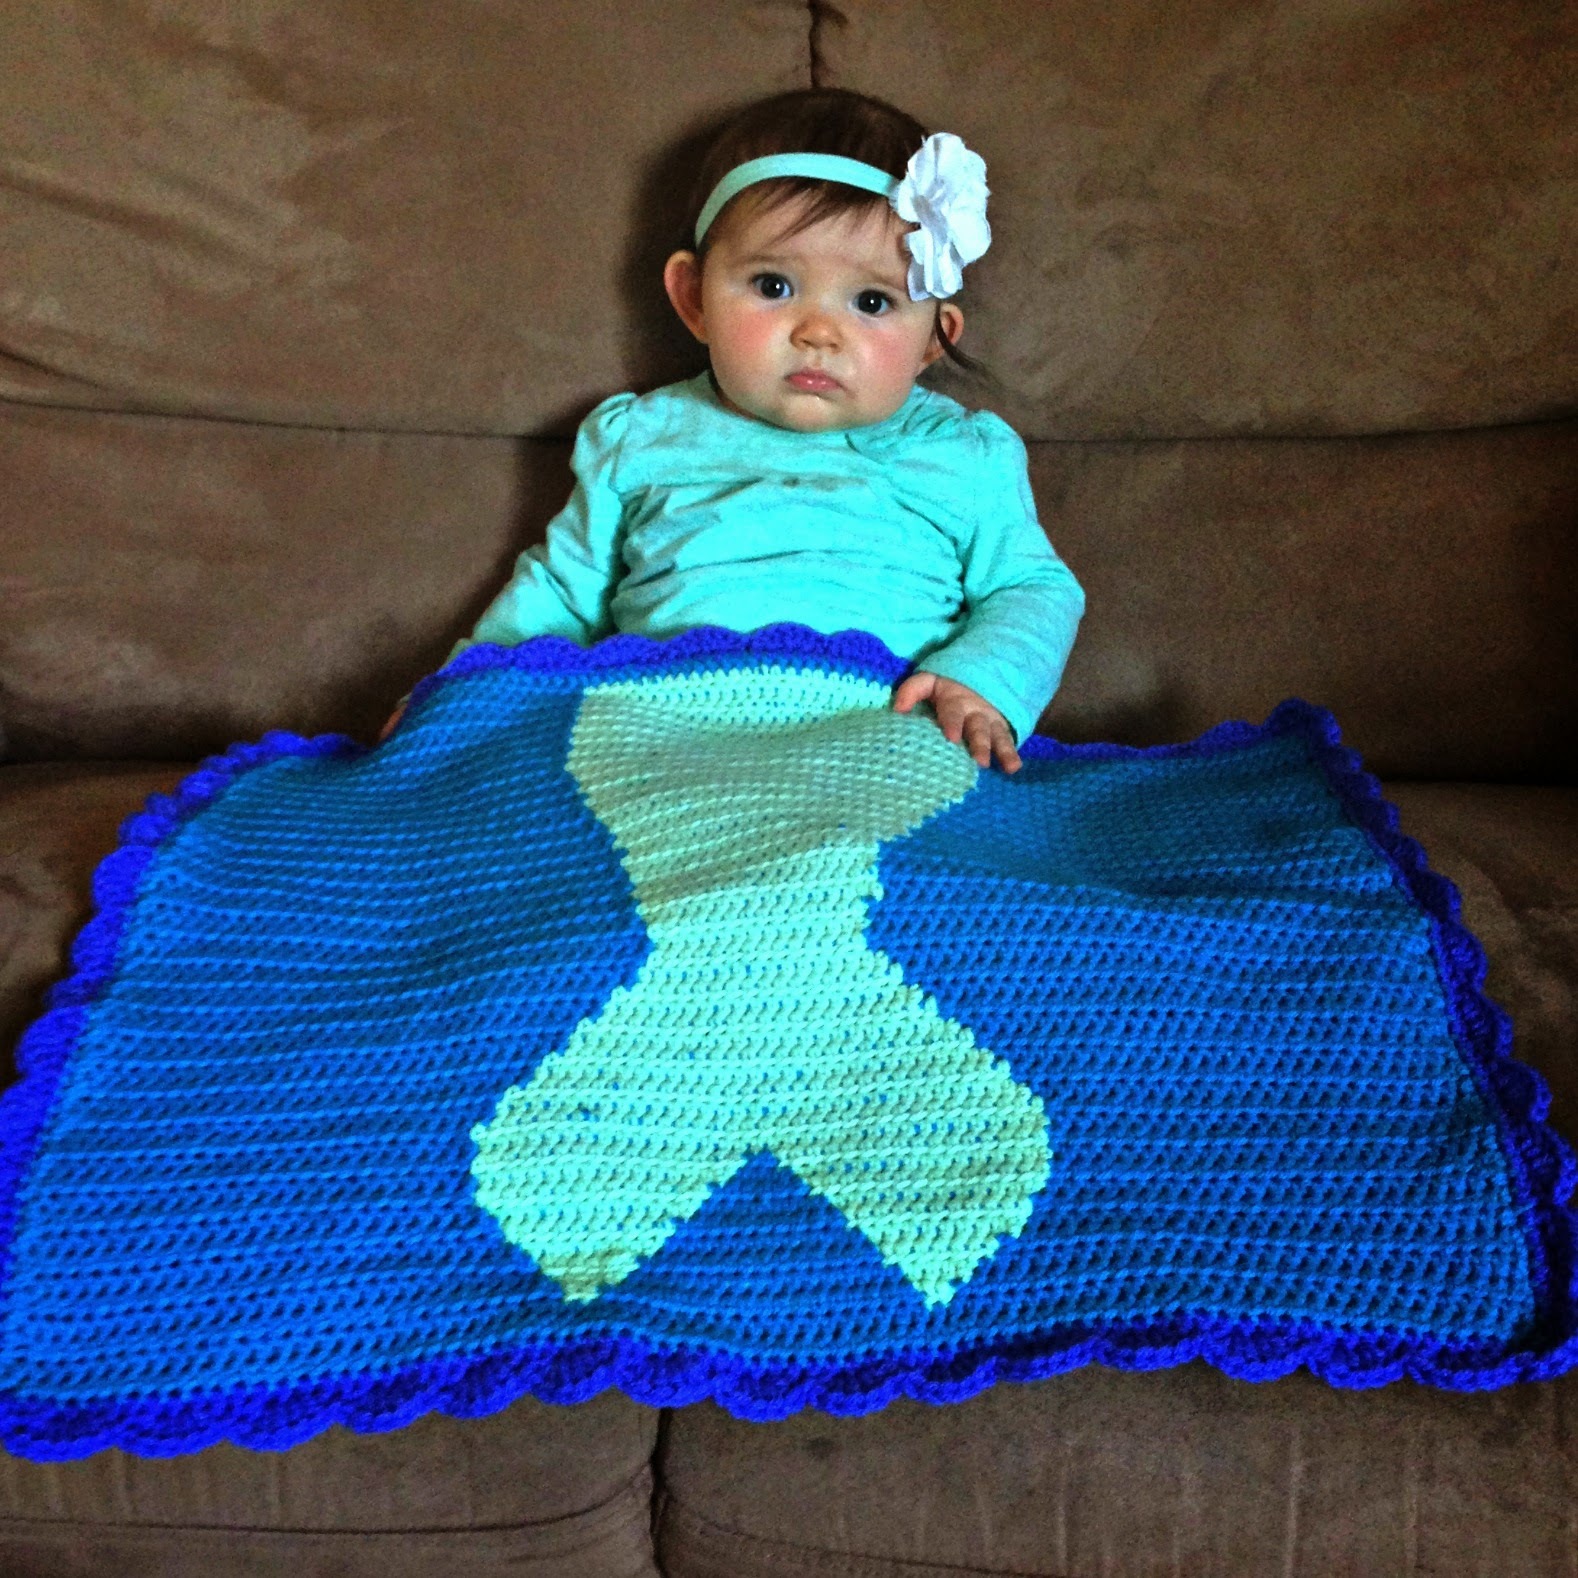 Mermaid Crochet Pattern For Baby Free Crochet Mermaid Tail Blanket Pattern Thefriendlyredfox